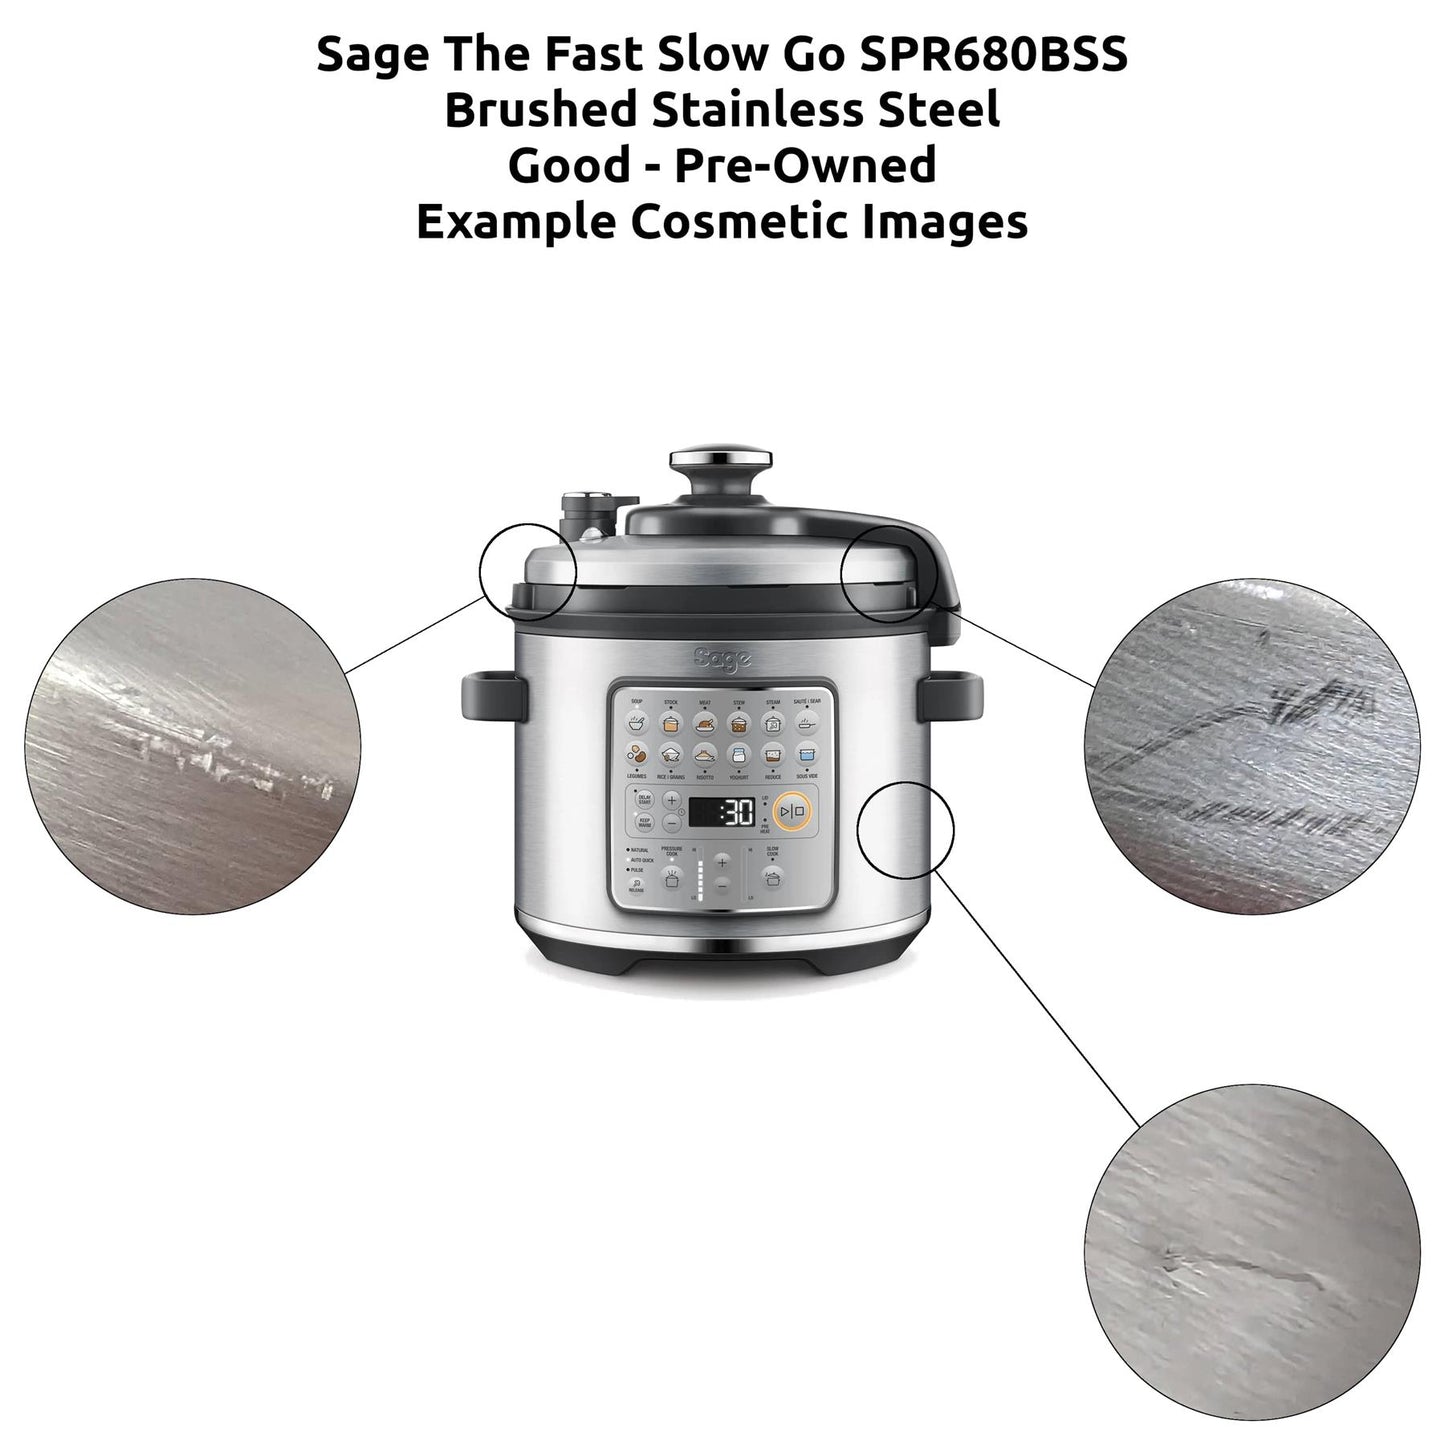 Sage The Fast Slow Go SPR680 Pressure Cooker